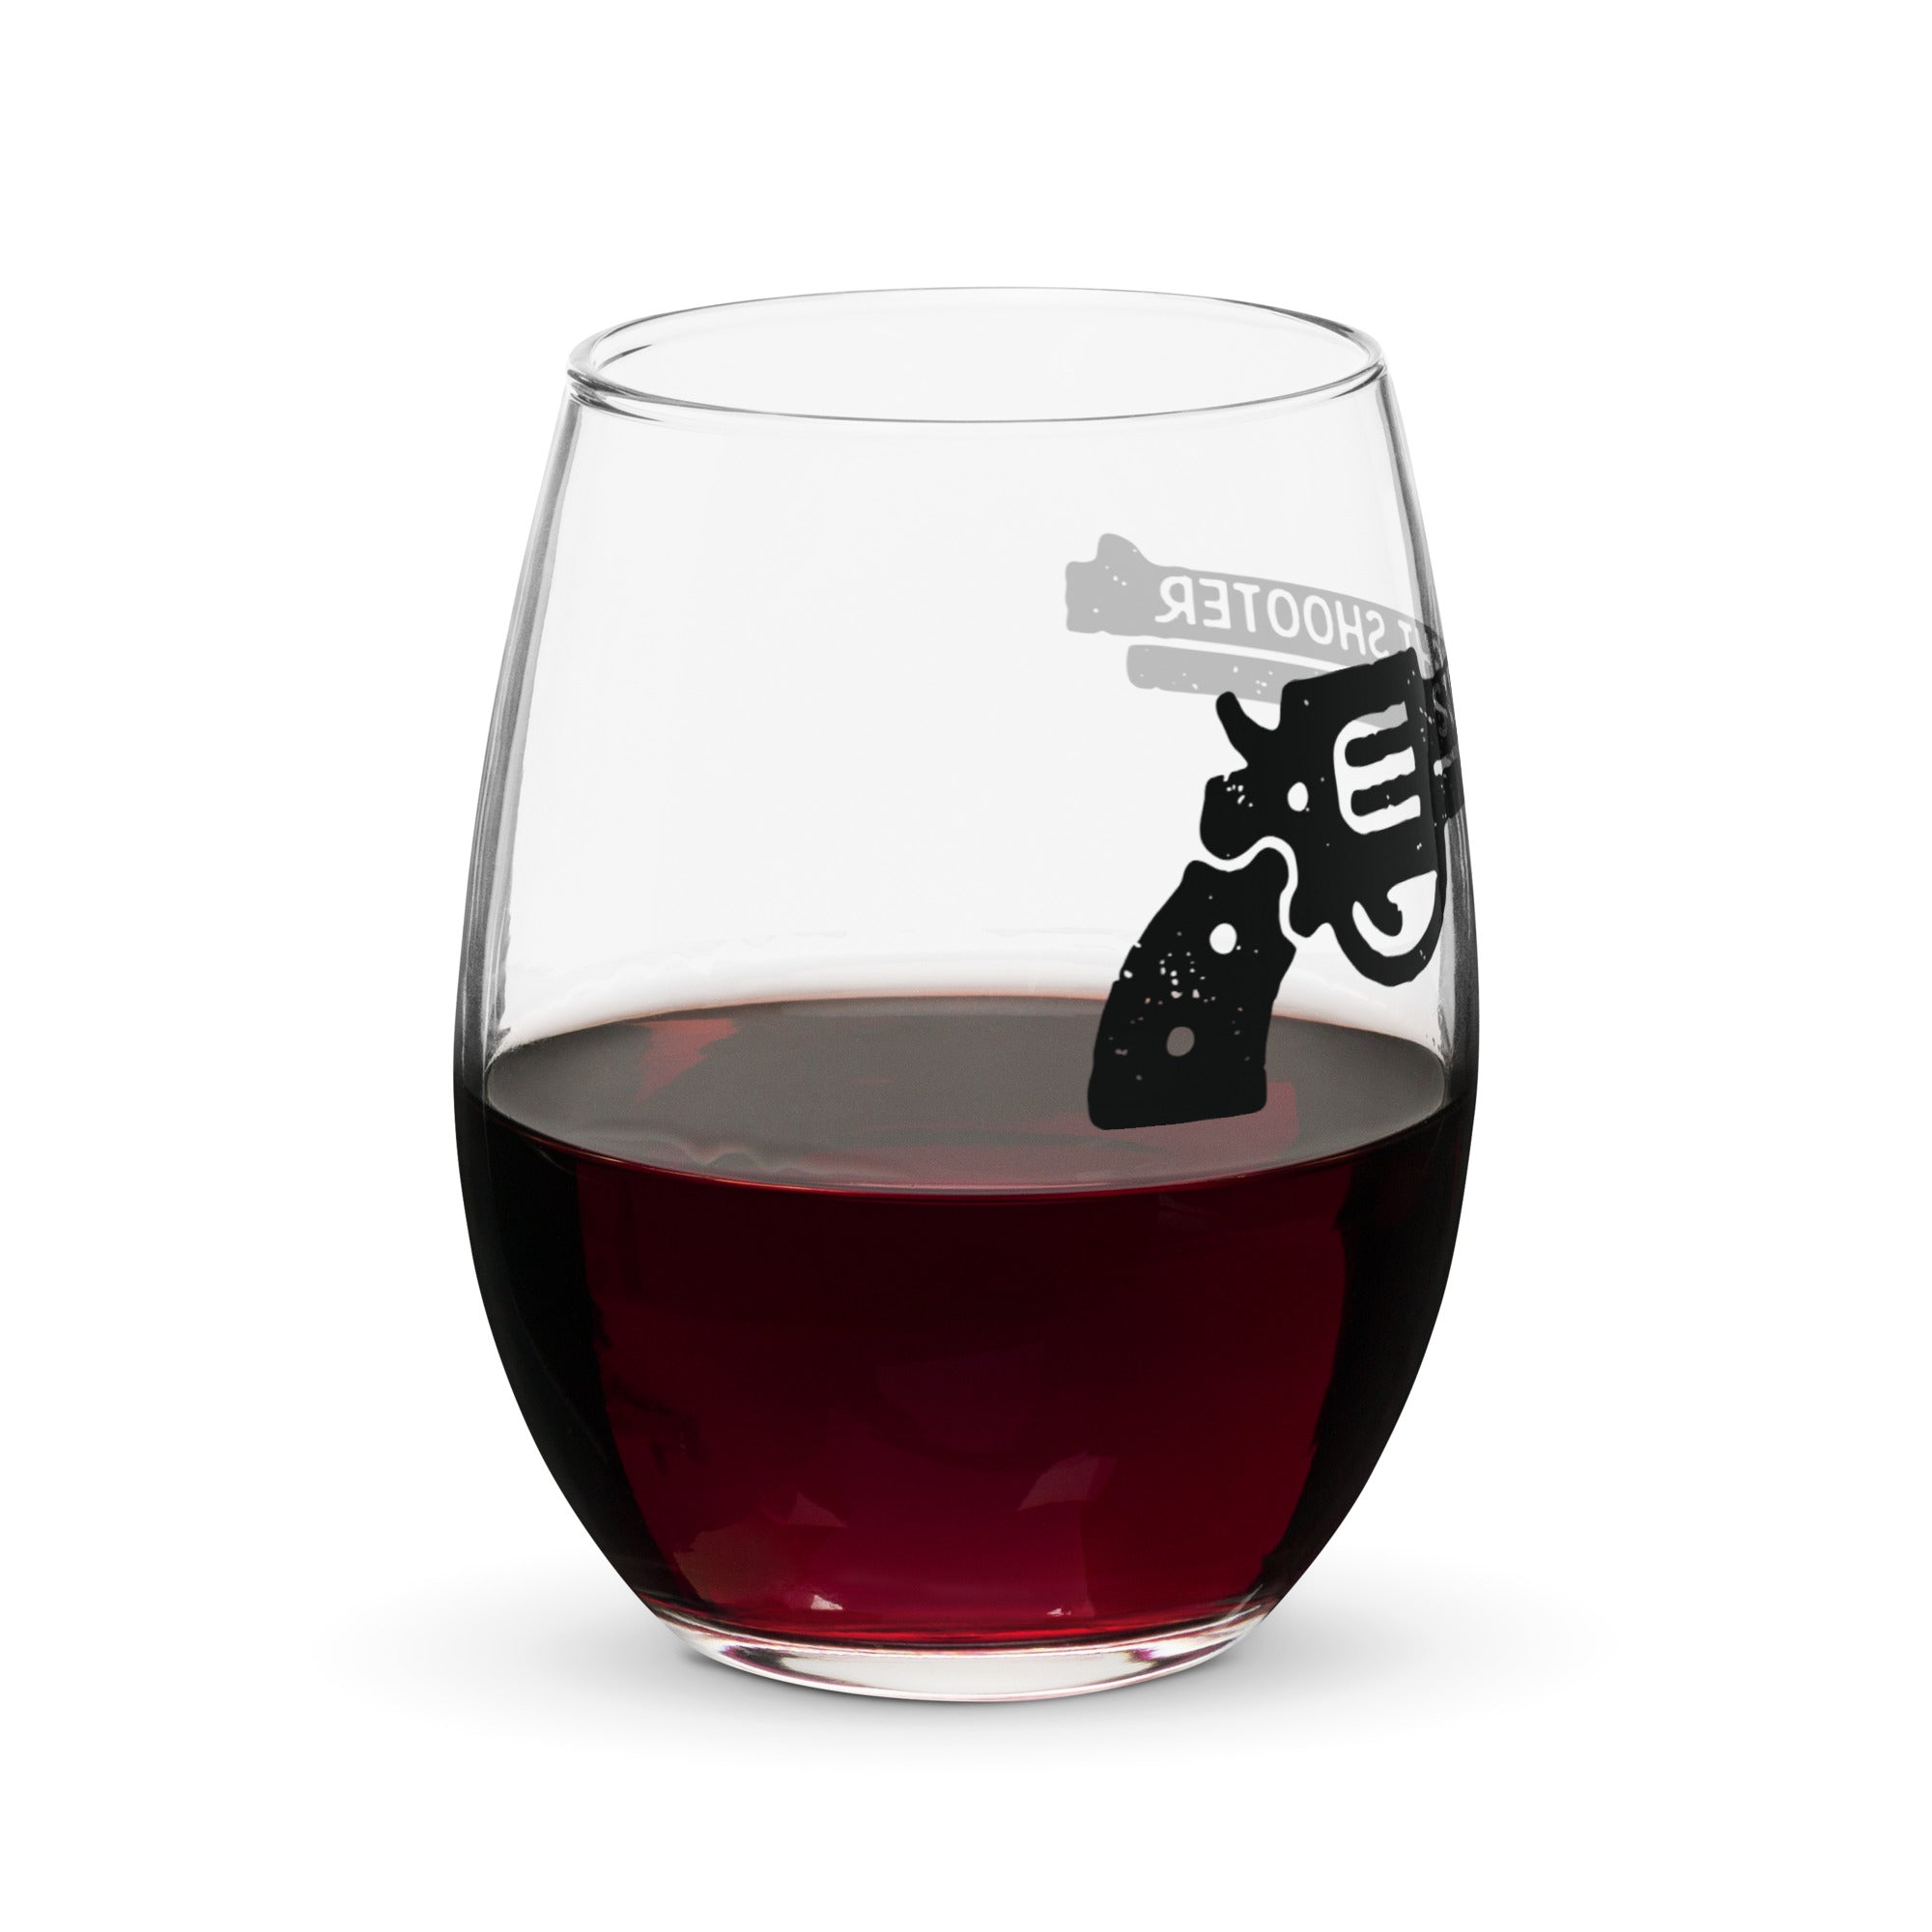 Straight Shooter Stemless Wine Glass